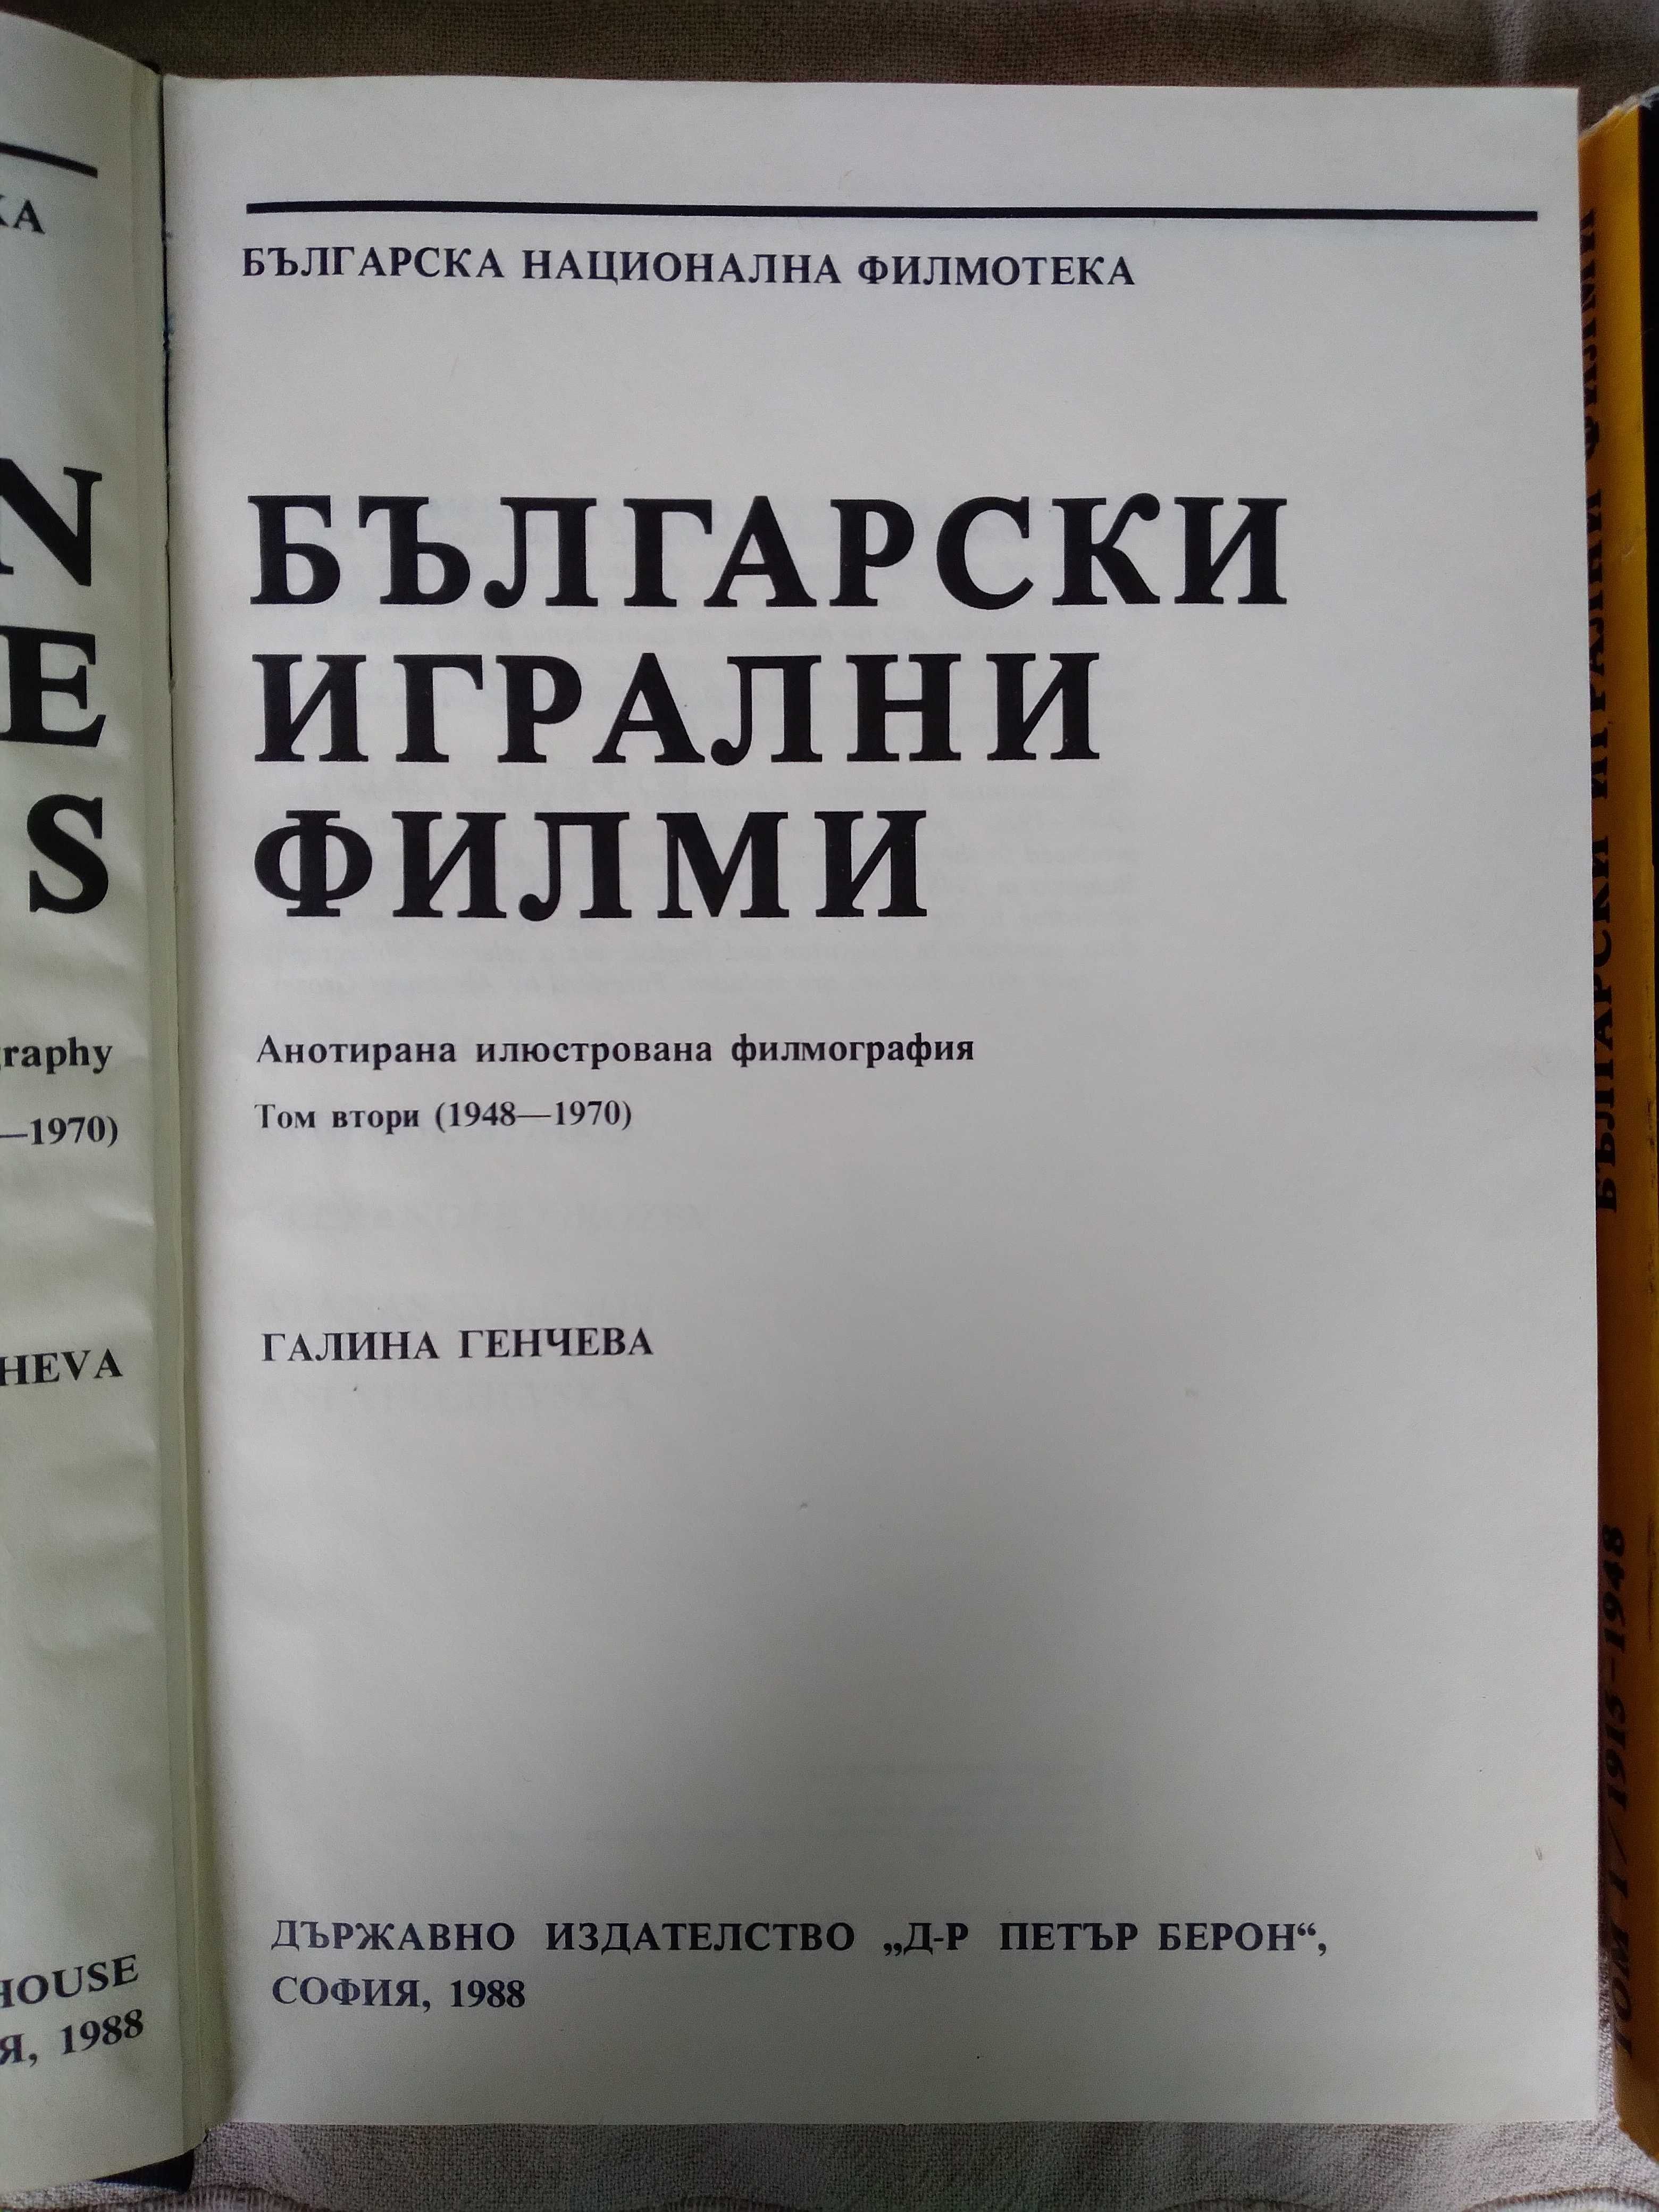 Книги за киното, киноизкуство, енциклопедии, руско и българско кино